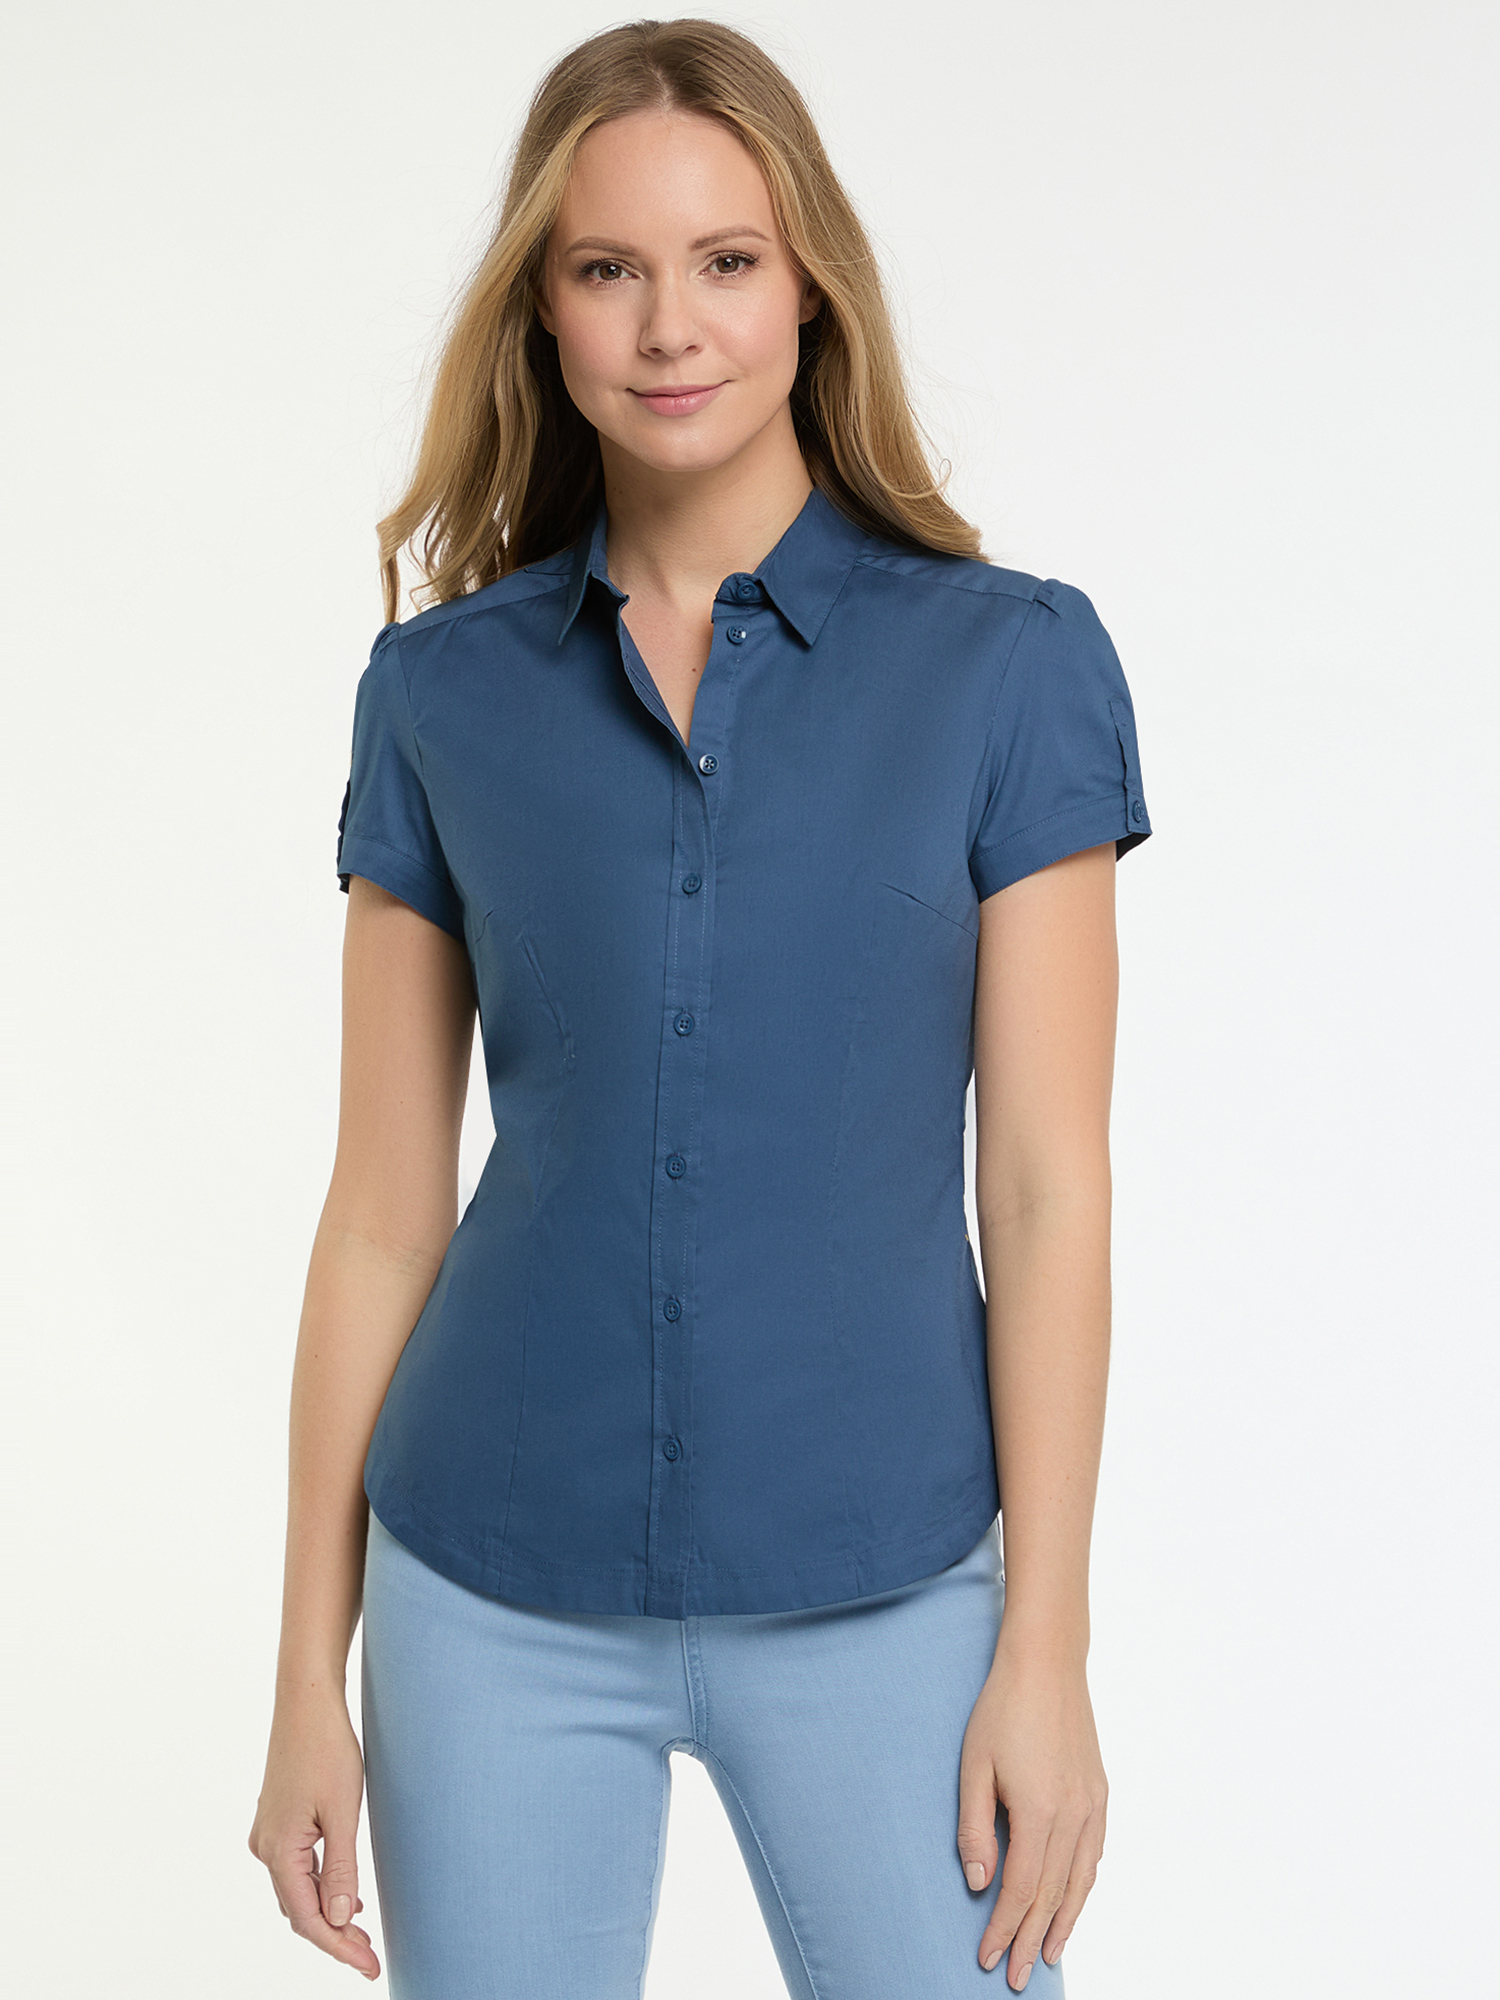 Рубашка женская oodji 13K01004-1B синяя 40